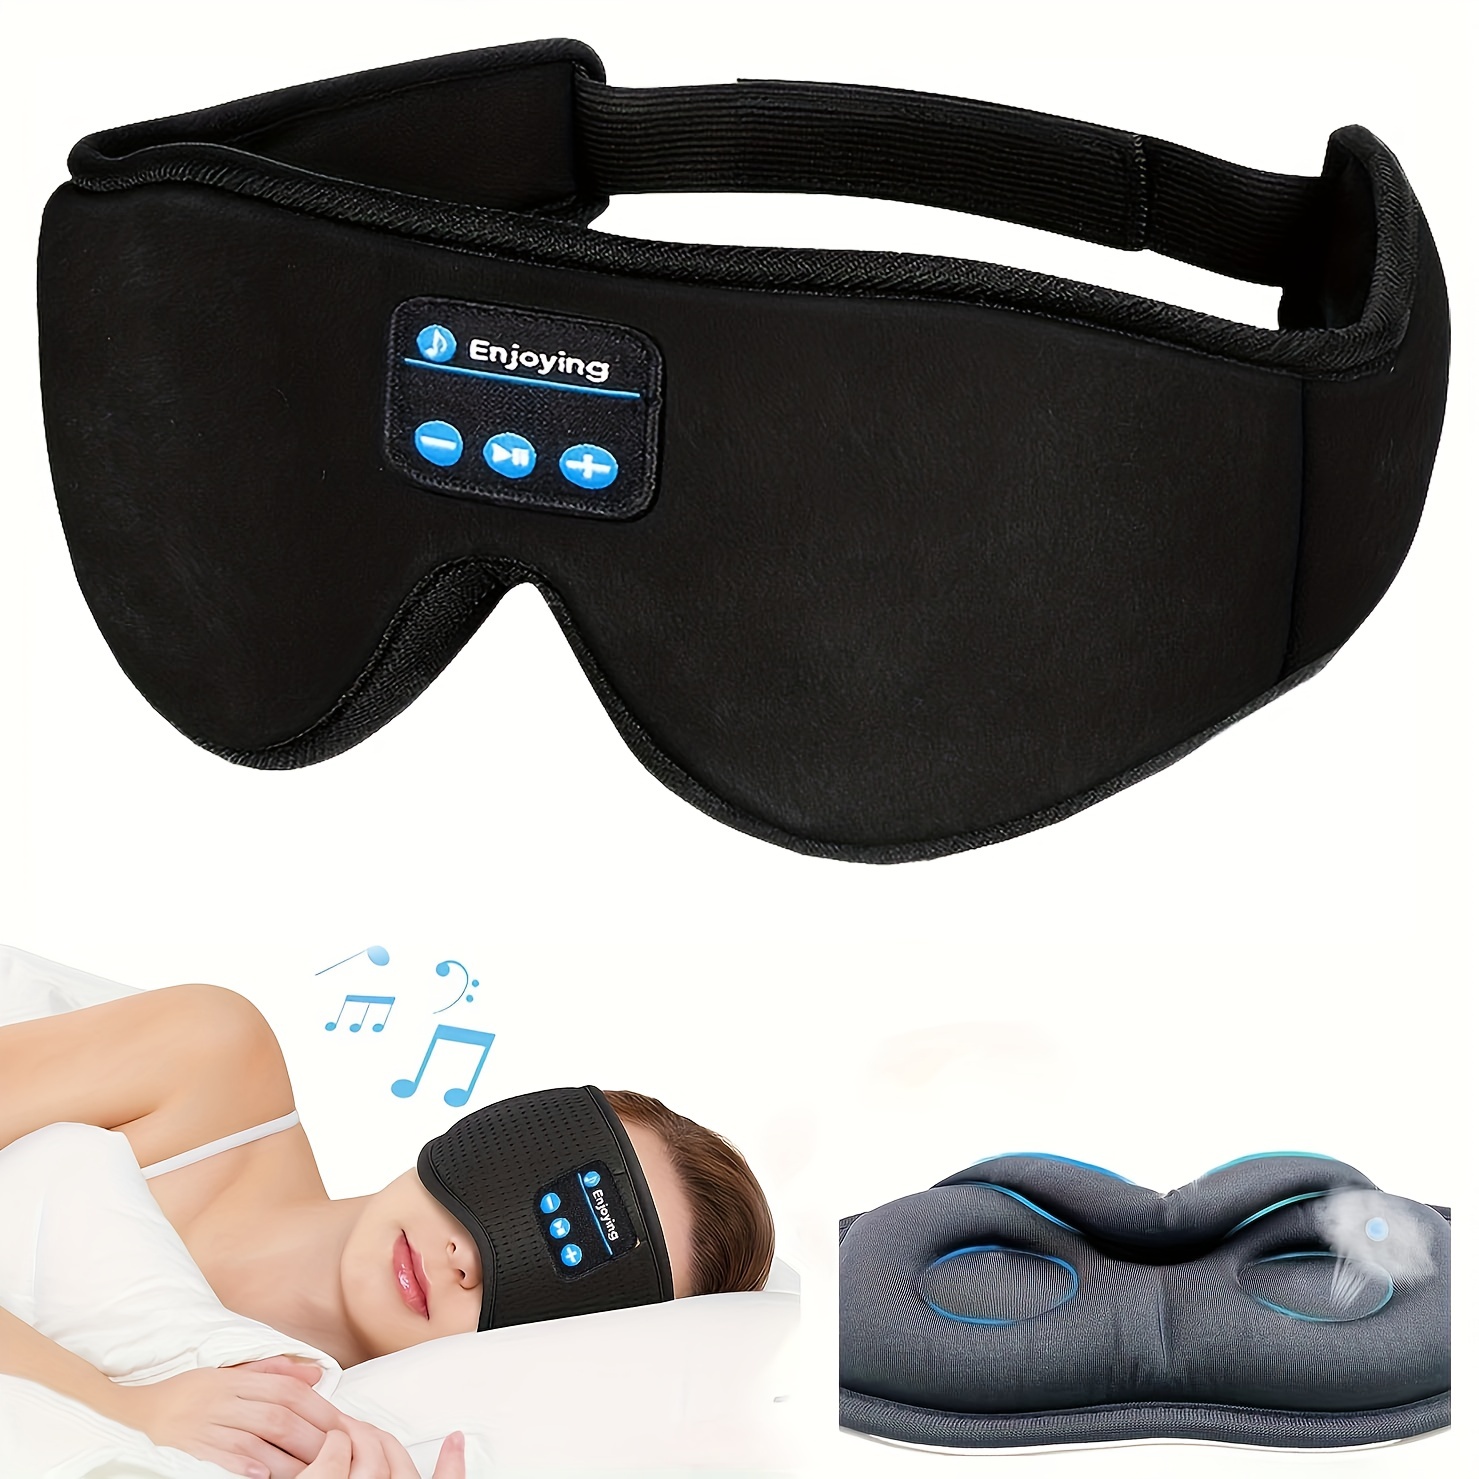 Comprar Auriculares para dormir, transpirables, Bluetooth 5,2, diadema 3D,  auriculares inalámbricos para dormir, música, antifaz, auriculares para  dormir de lado